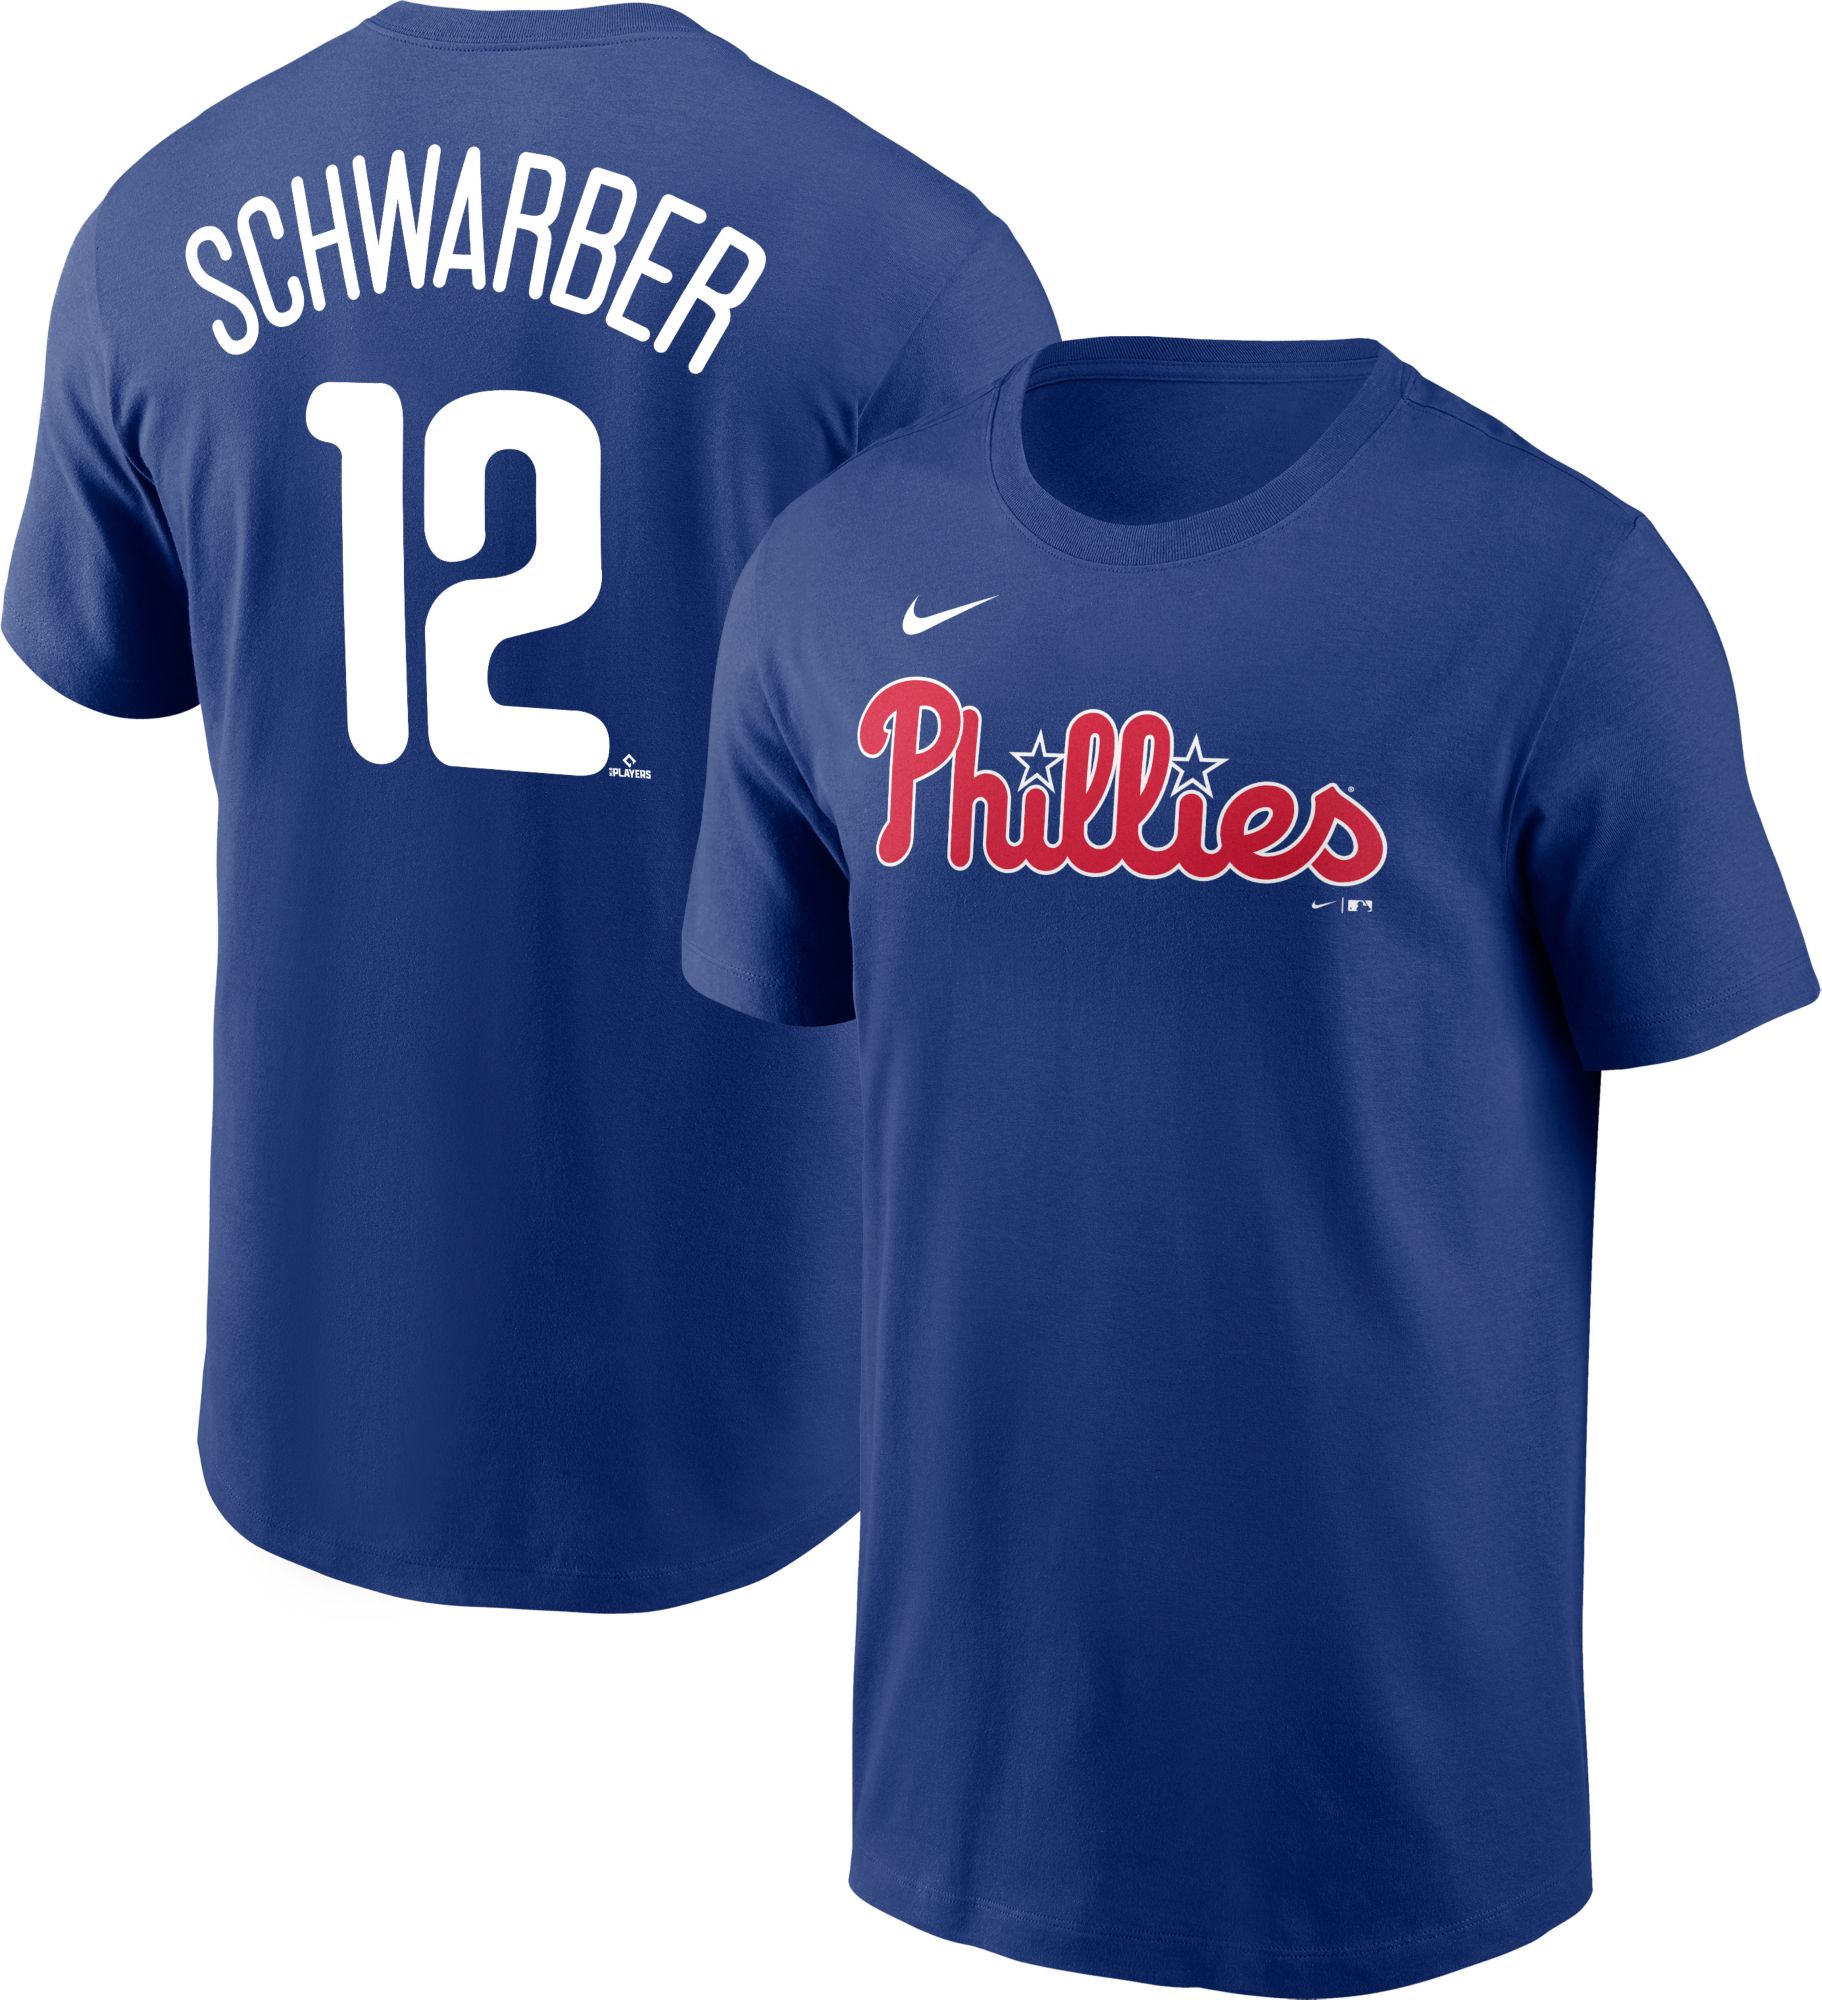 Kyle Schwarber Youth Jersey - Philadelphia Phillies Replica Kids